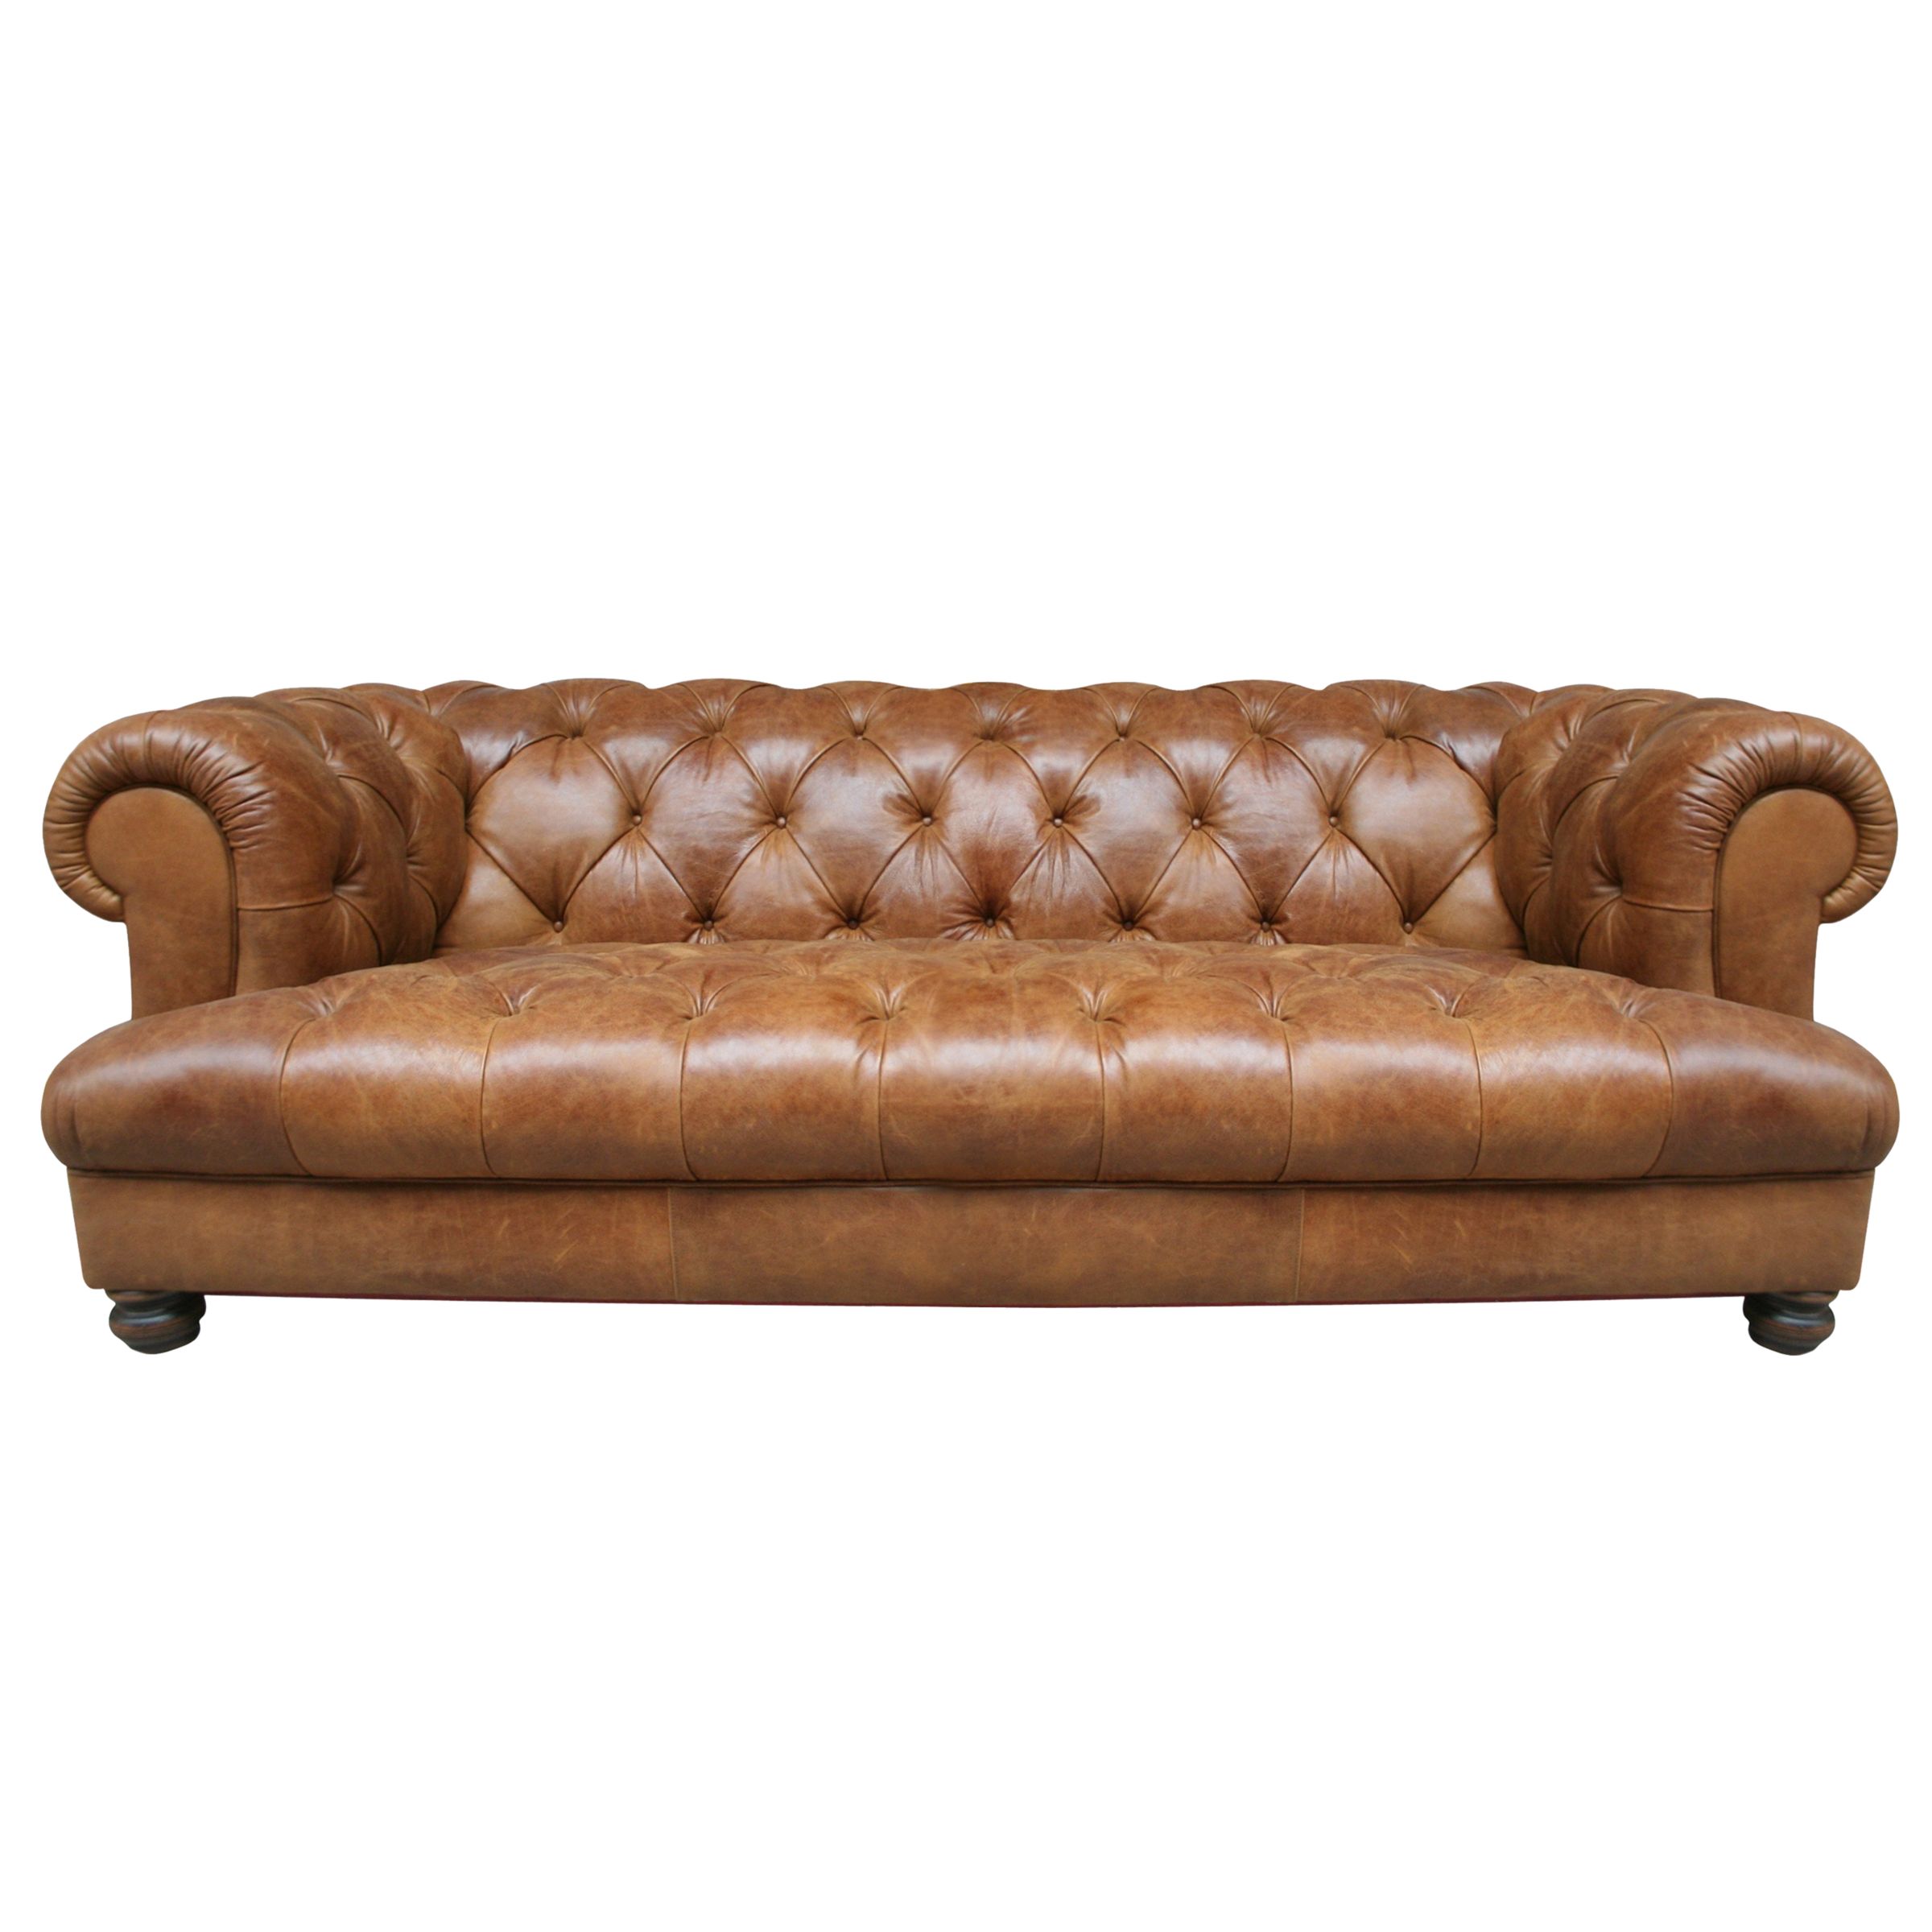 Drummond Grand Leather Sofa, Tan